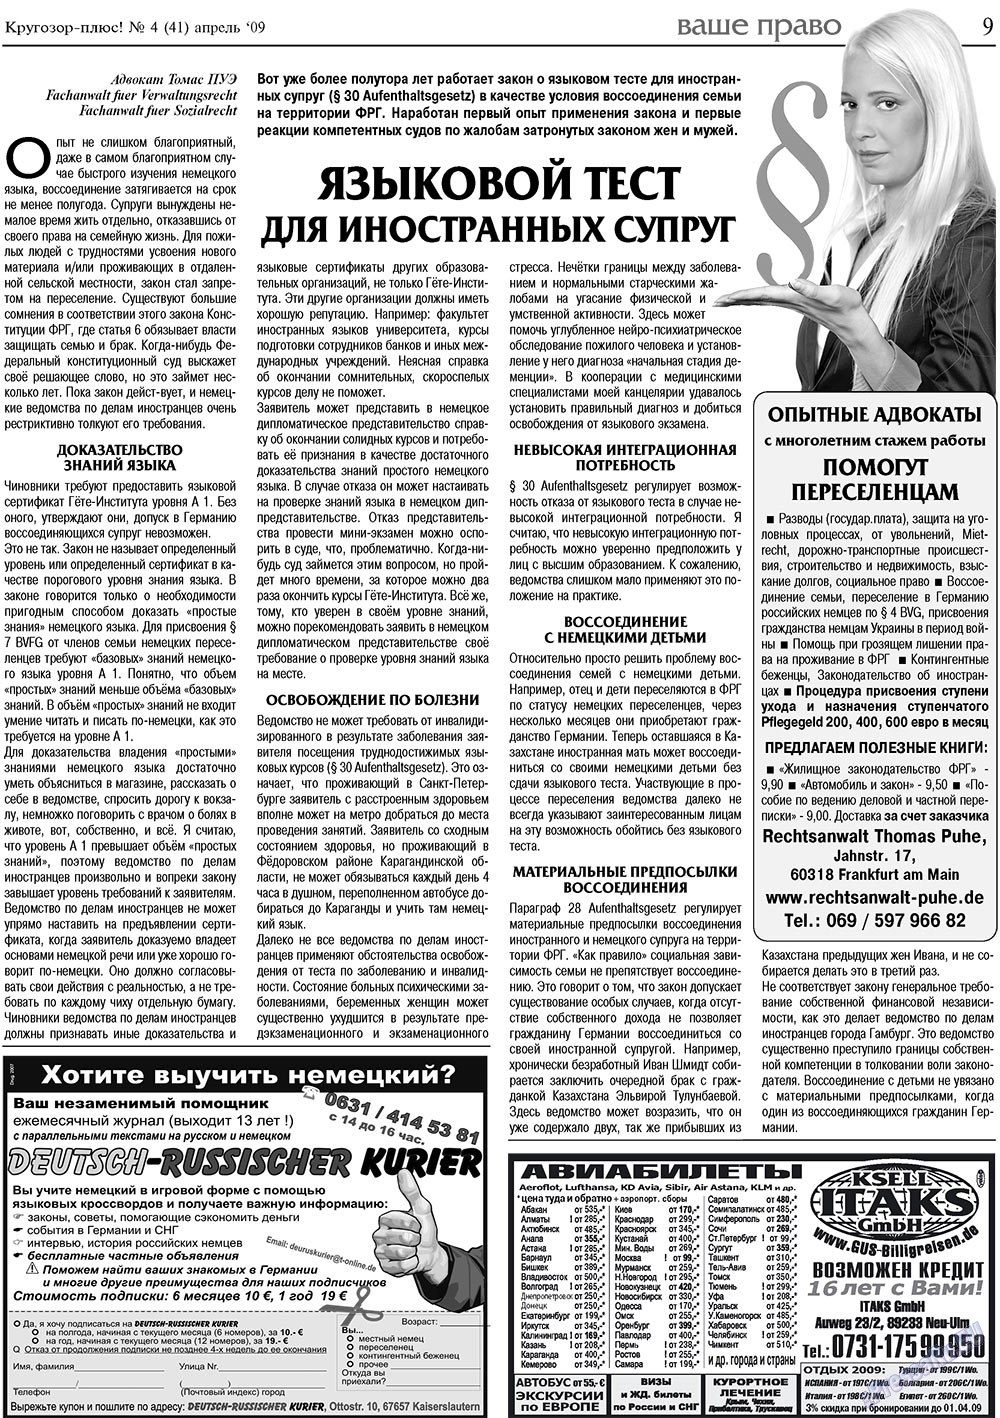 Кругозор плюс! (газета). 2009 год, номер 4, стр. 9